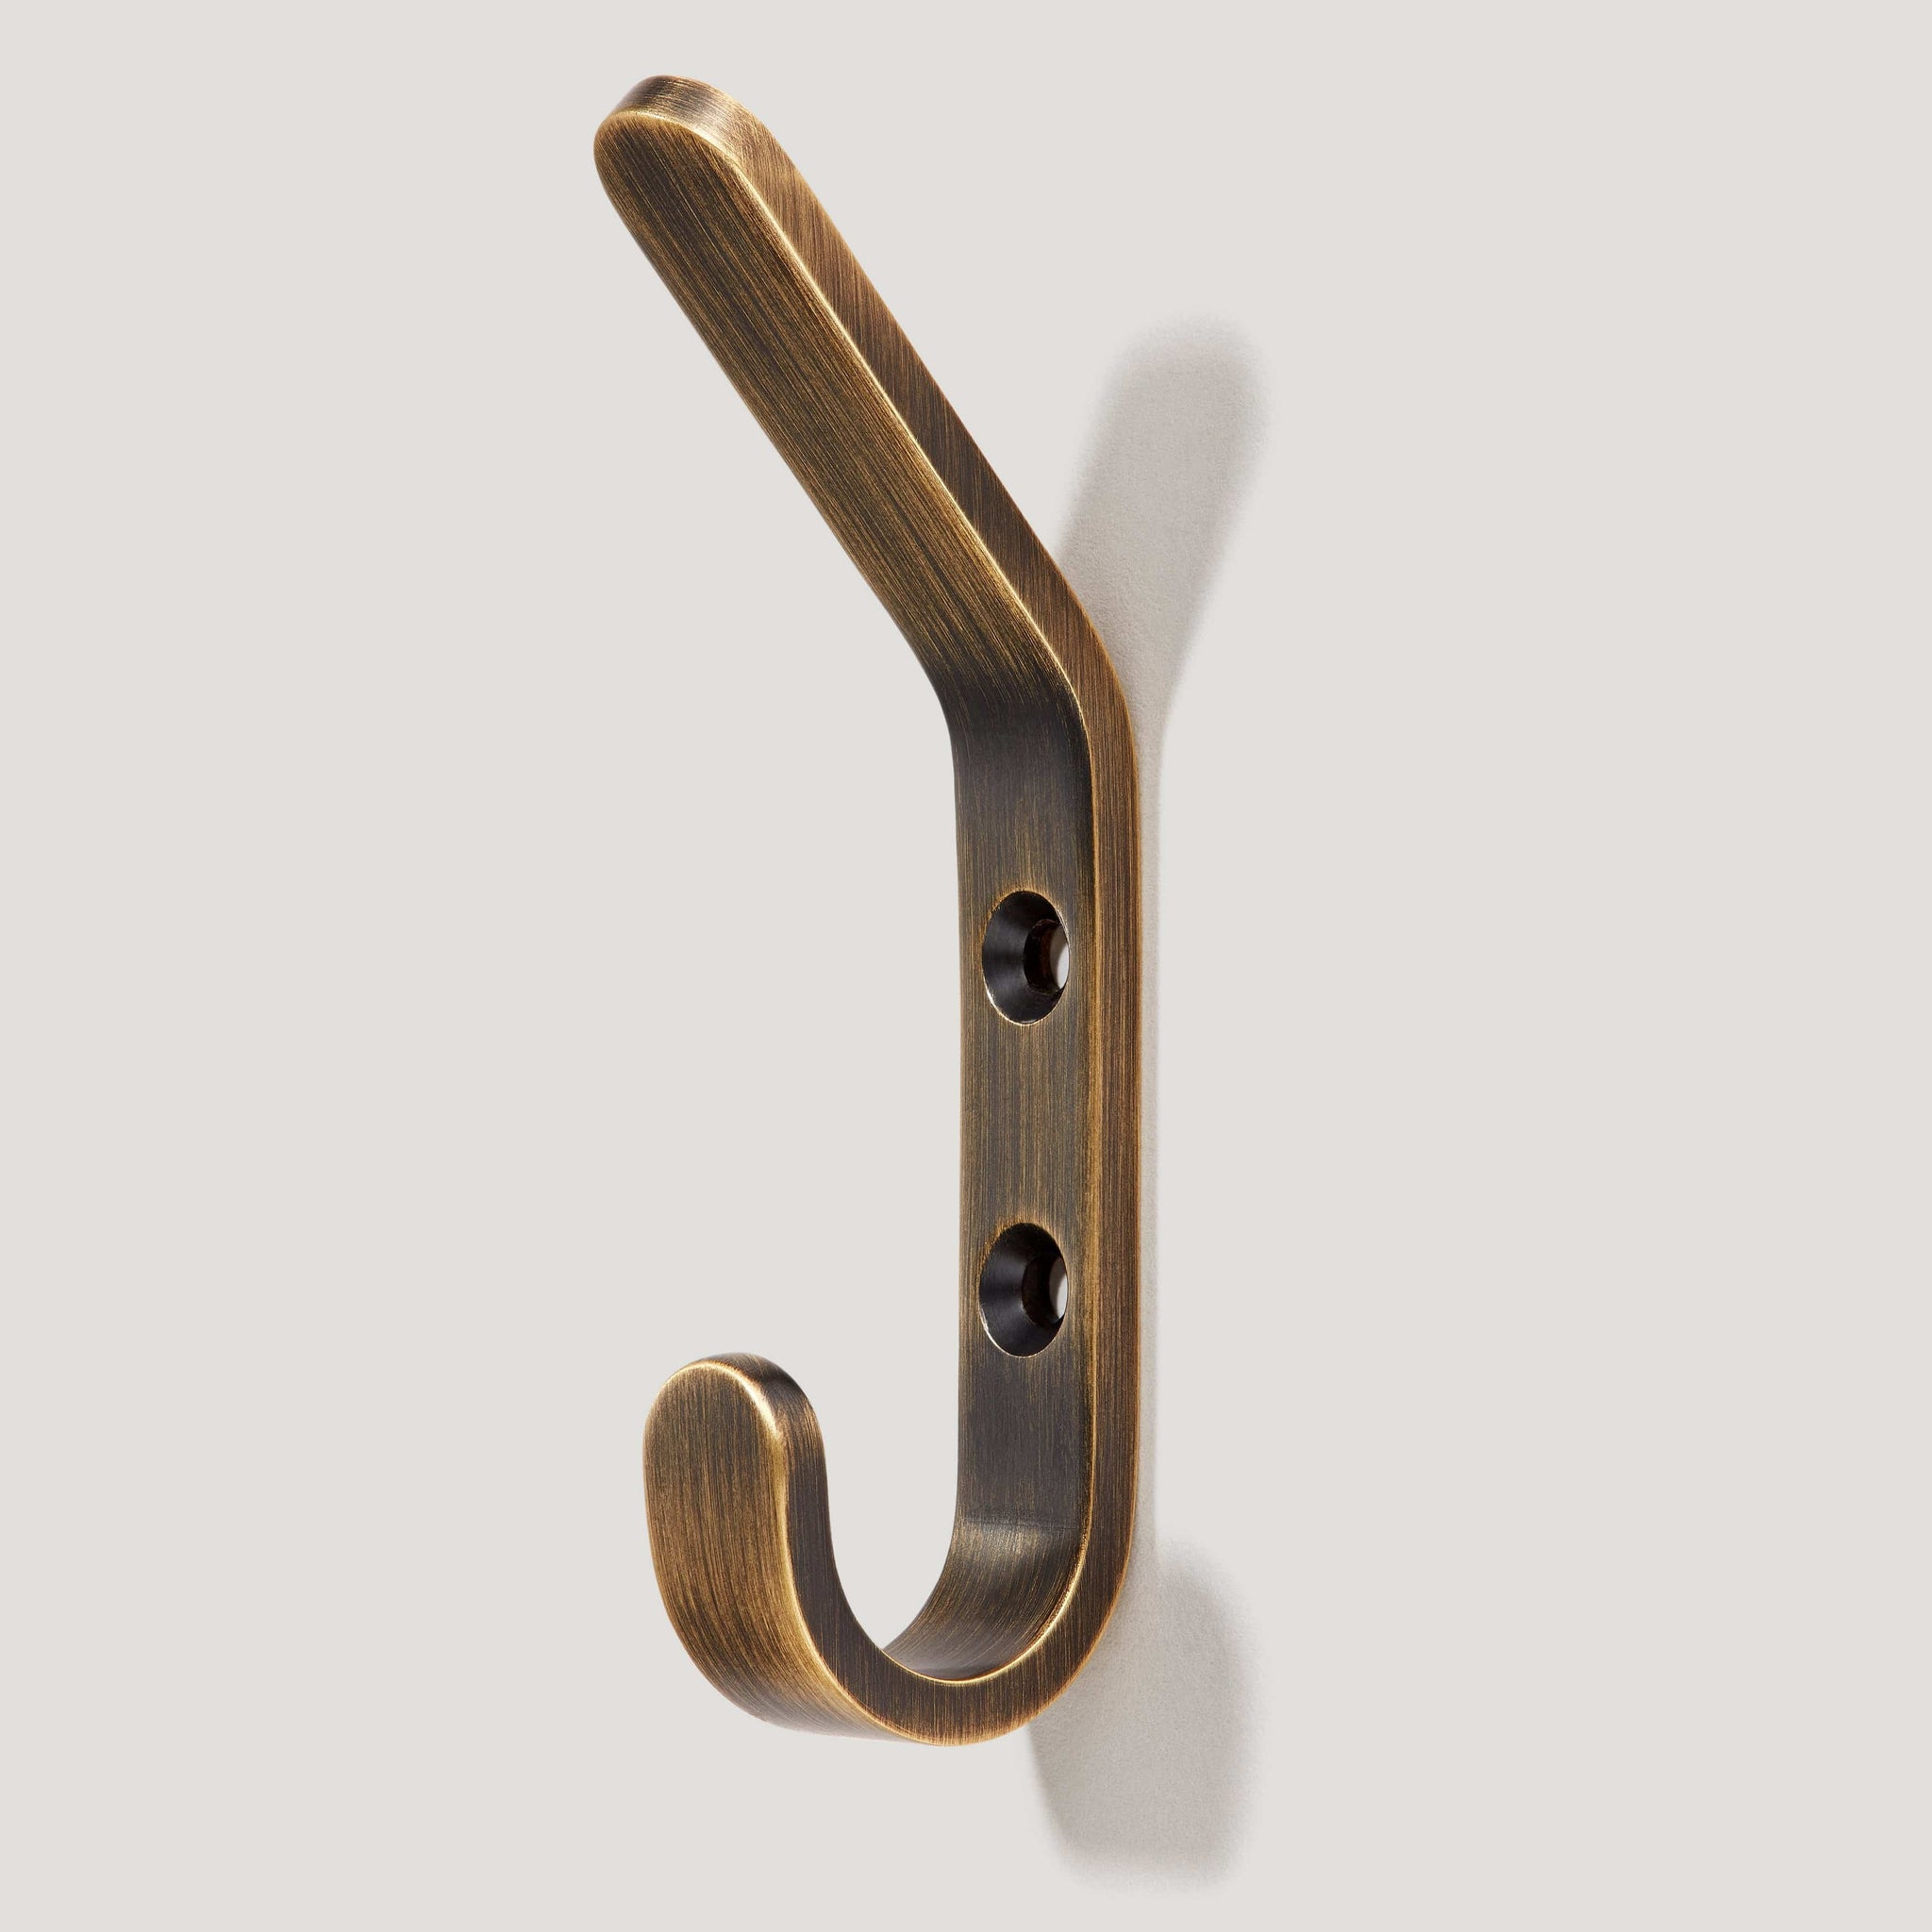 Brass Coat Hooks - Brass Hook - Antique Brass Hooks